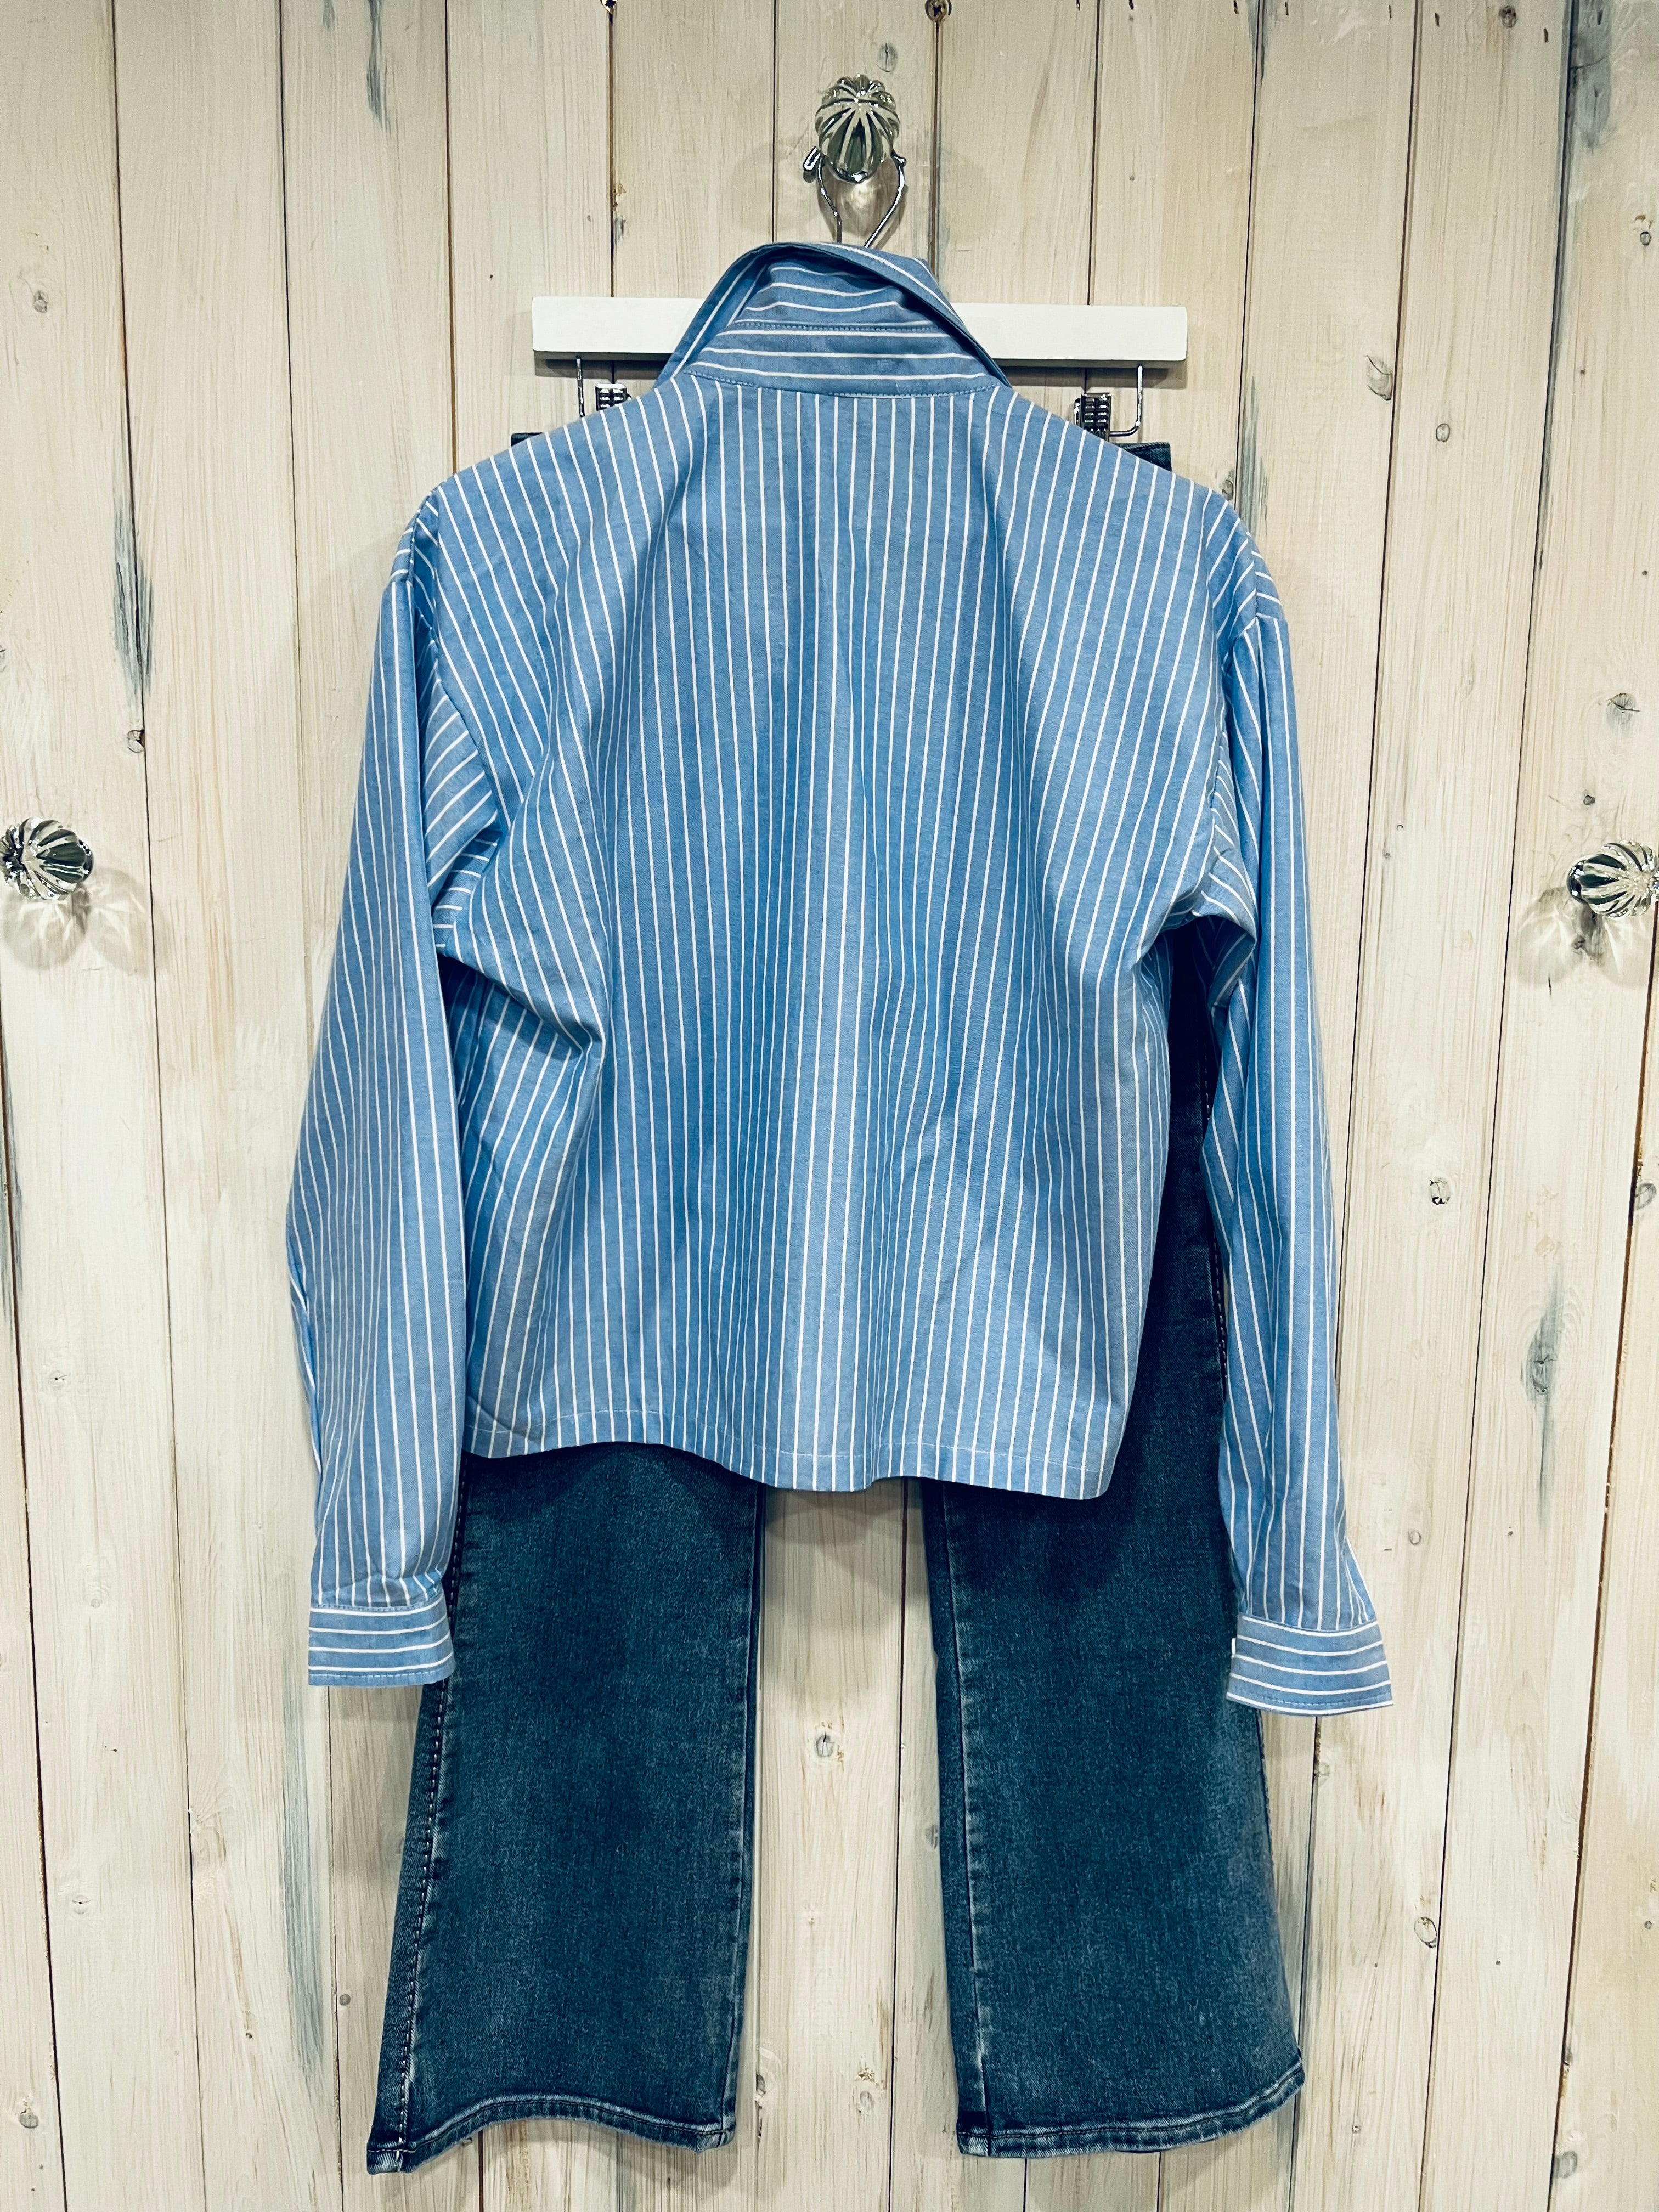 Clare Lace Stripe Shirt - Sam & Lili New Collection